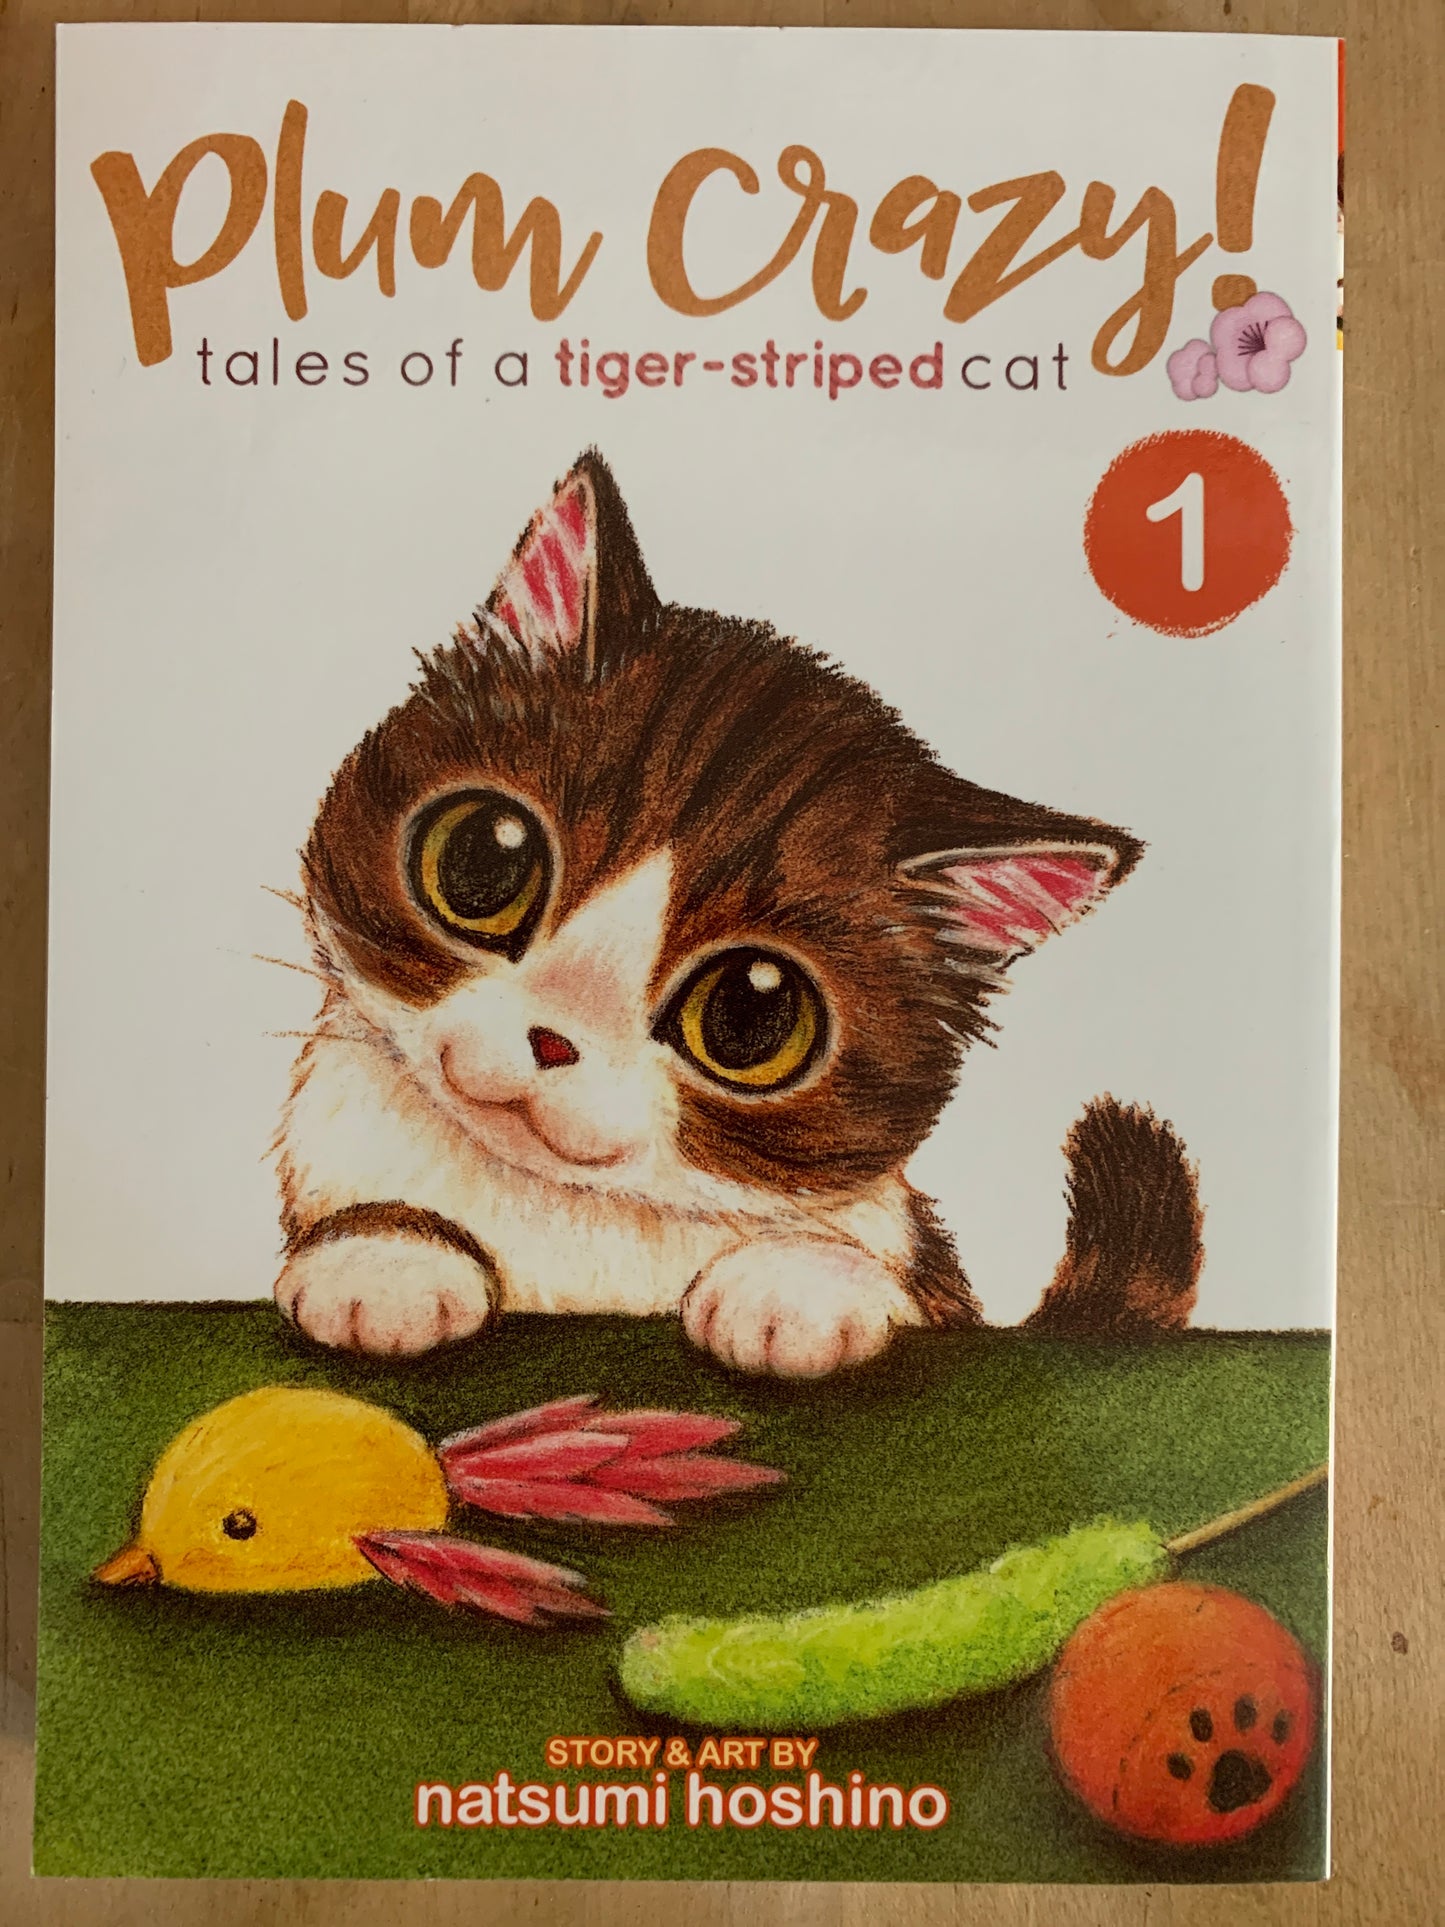 Plum Crazy! Tales of a Tiger-Striped Cat Volume 1